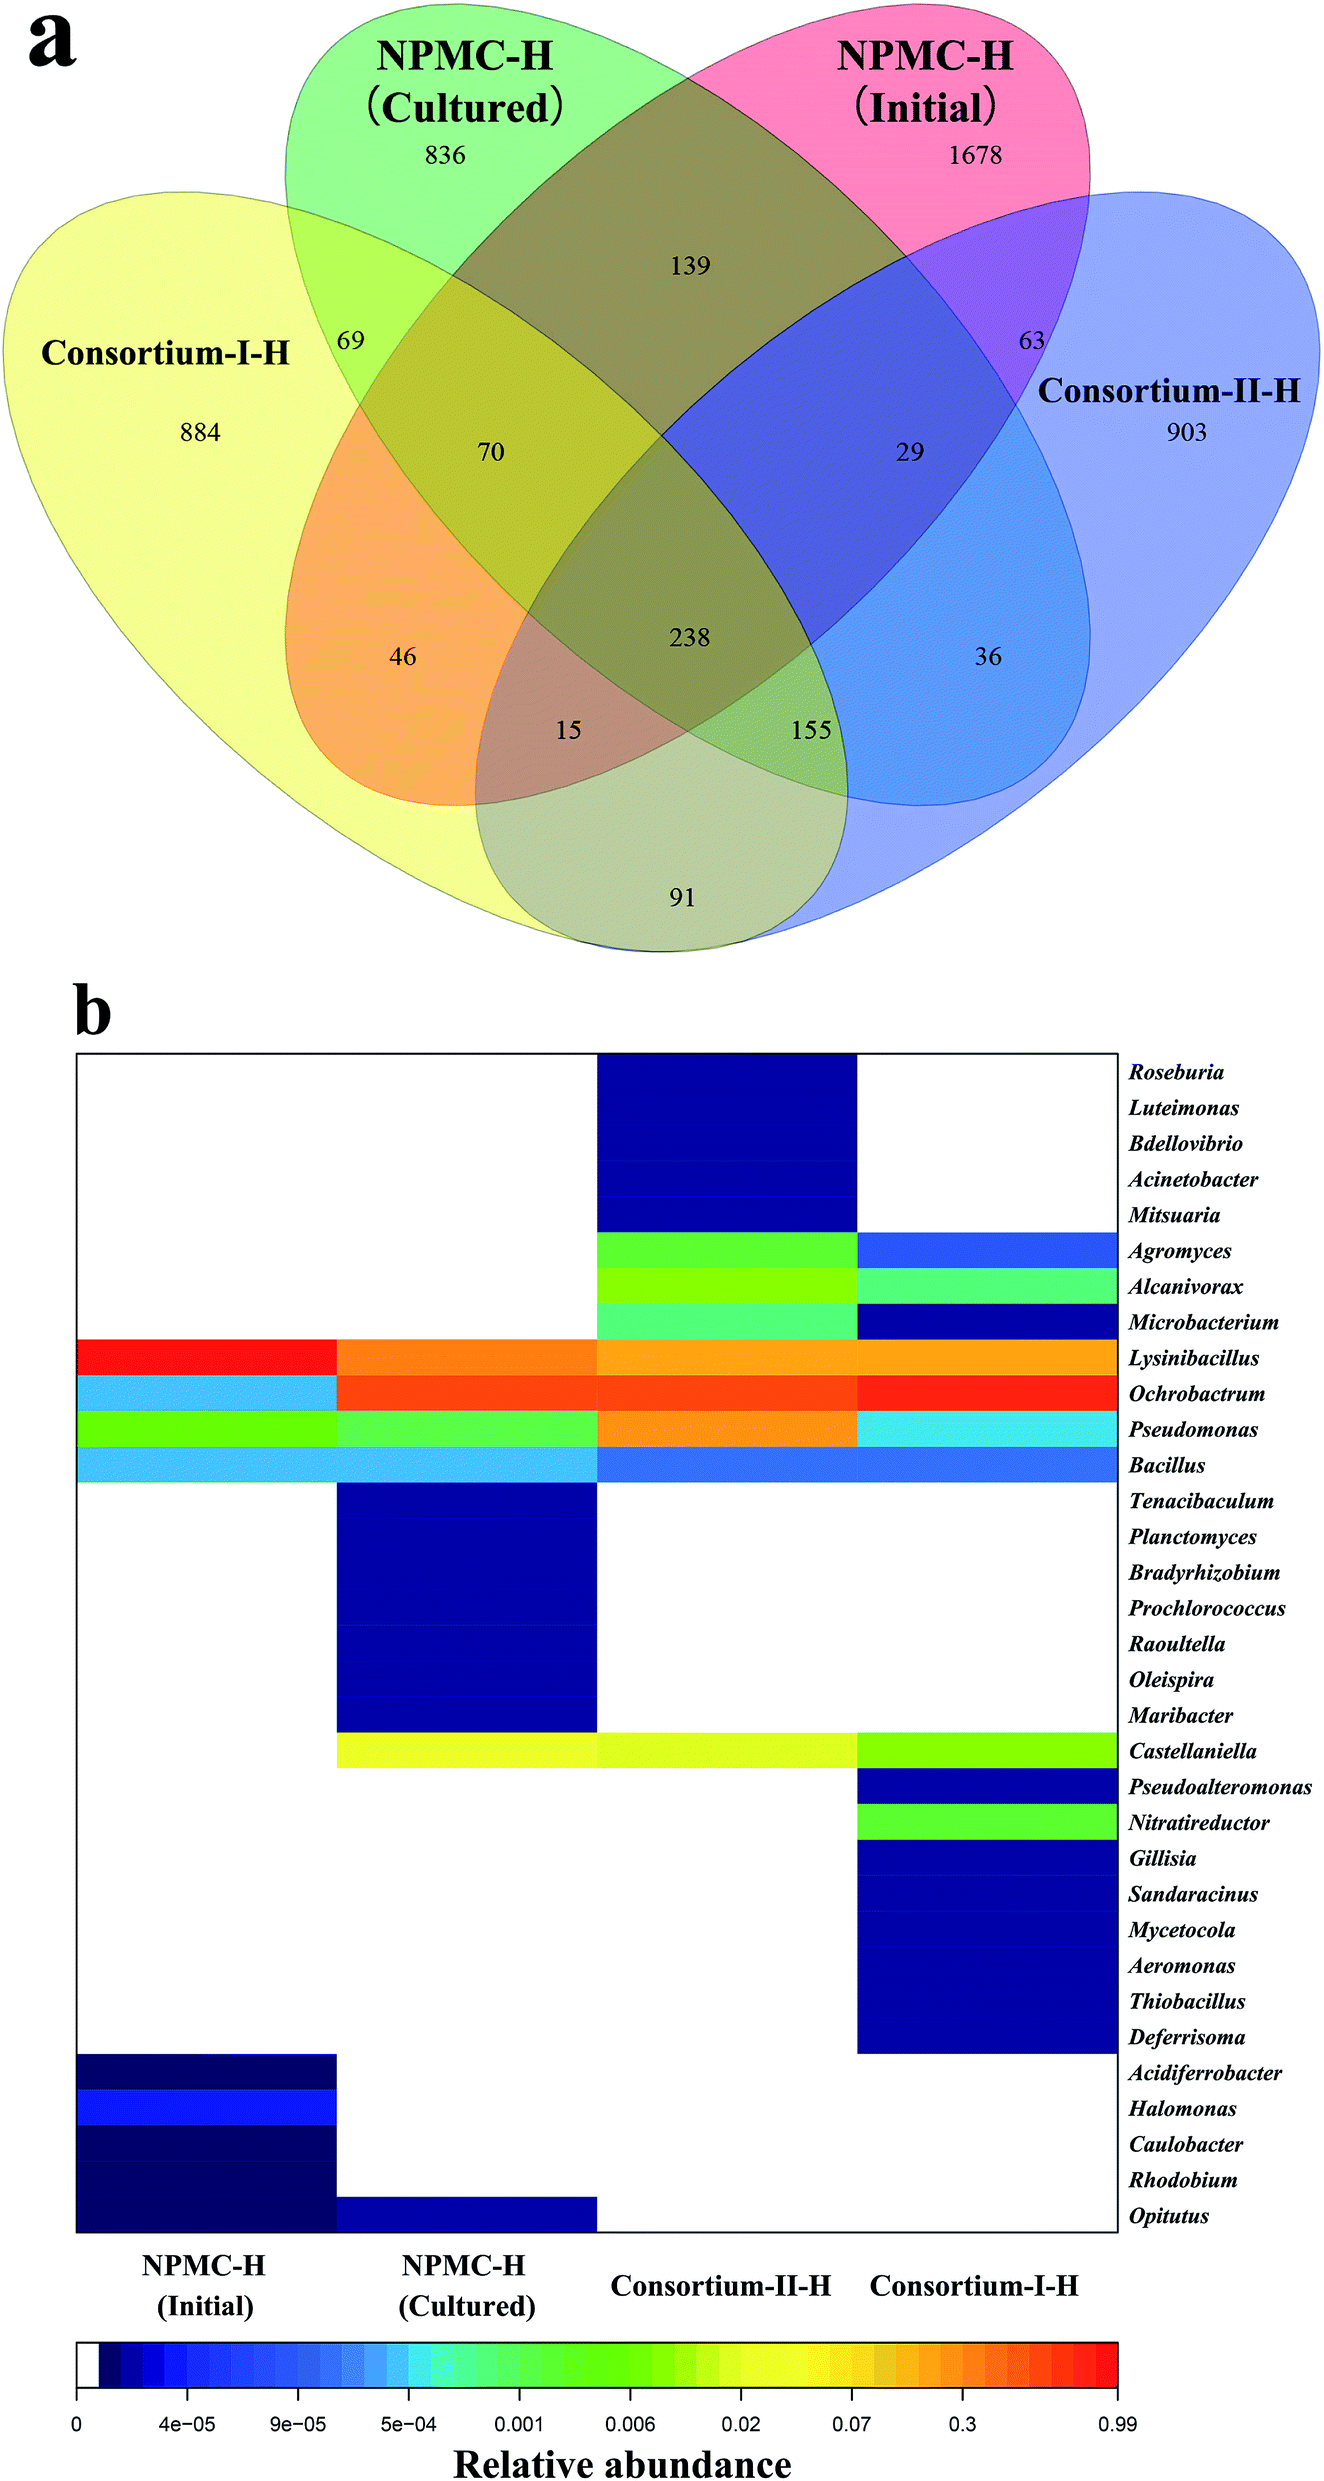 autotrophs vs heterotrophs venn diagram